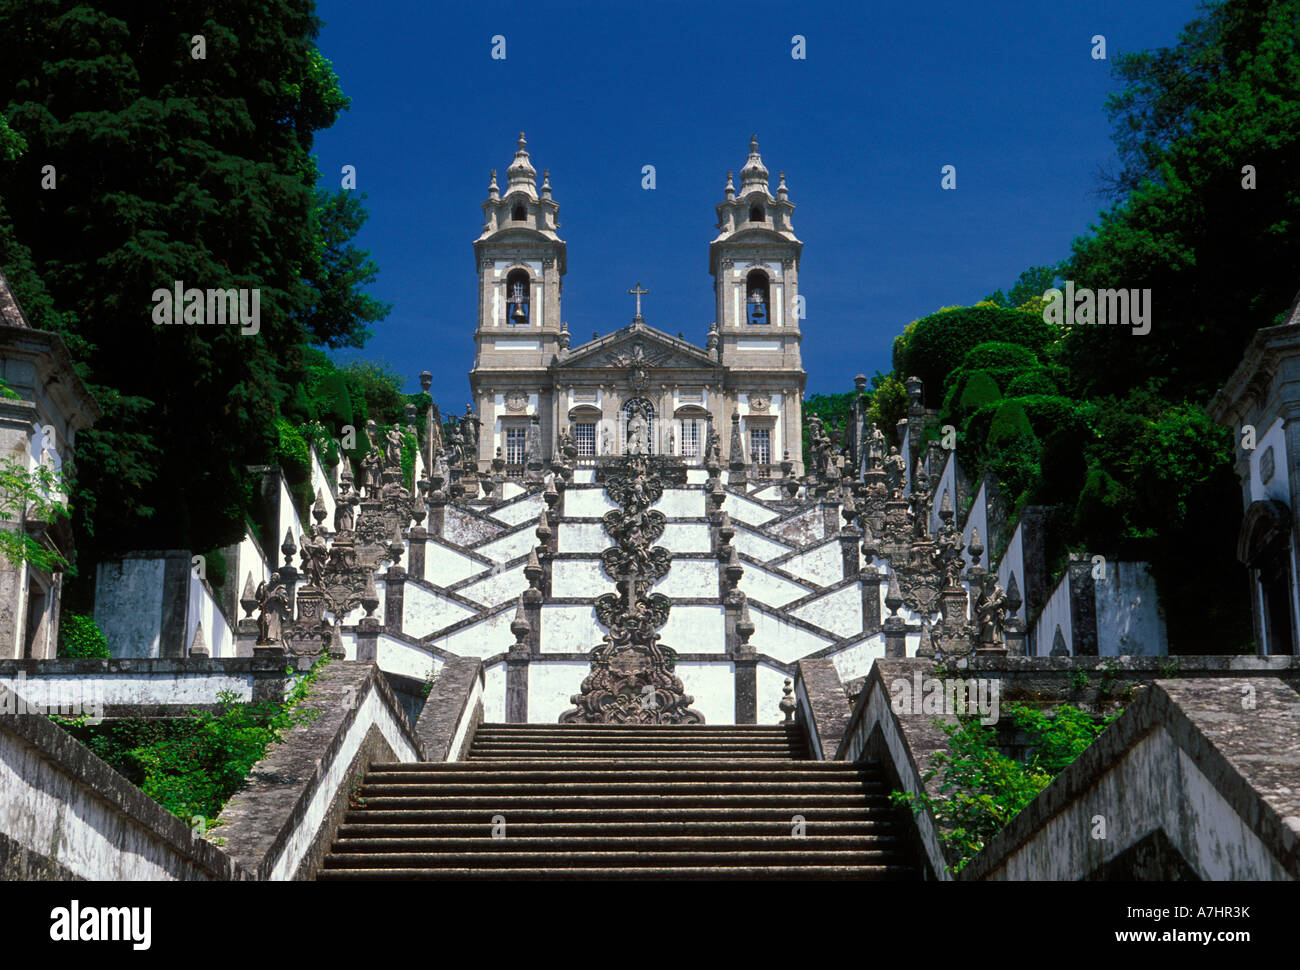 stairway, Church of Bom Jesus do Monte, Church, Bom Jesus do Monte, Roman Catholic church, Costa Verde, Braga, Braga District, Portugal, Europe Stock Photo